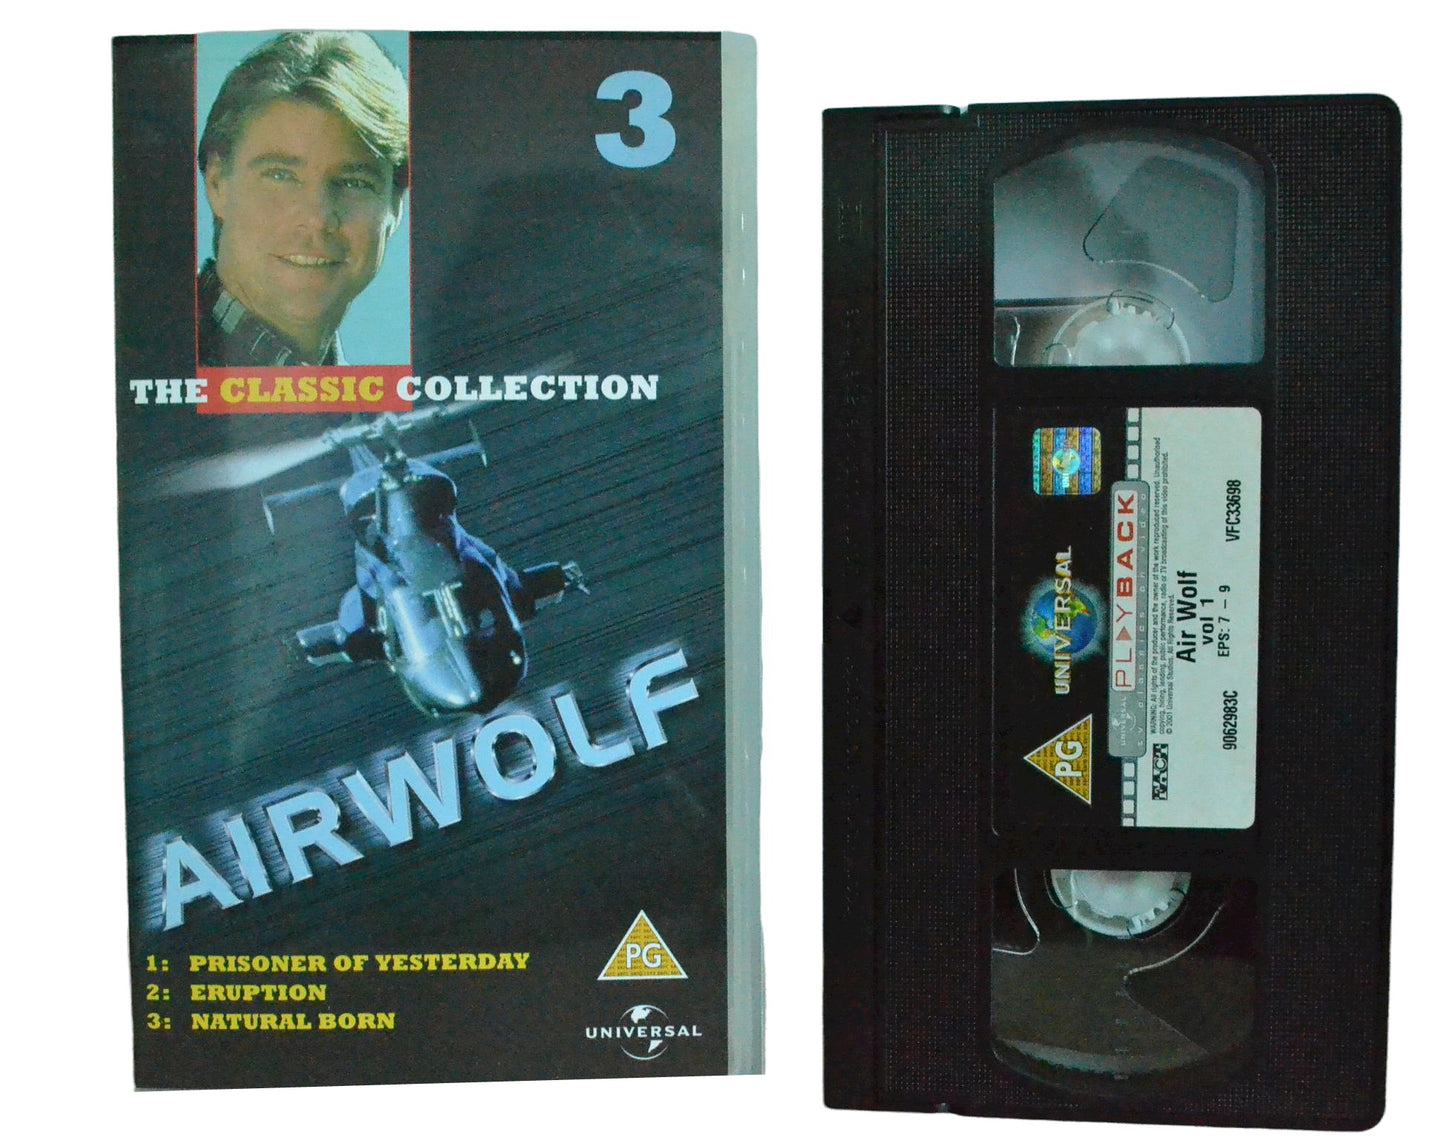 Airwolf 3 - Volume 1 (The Classic Colletion) - Jan-Michael Vincent - Play Back - Vintage - Pal VHS-